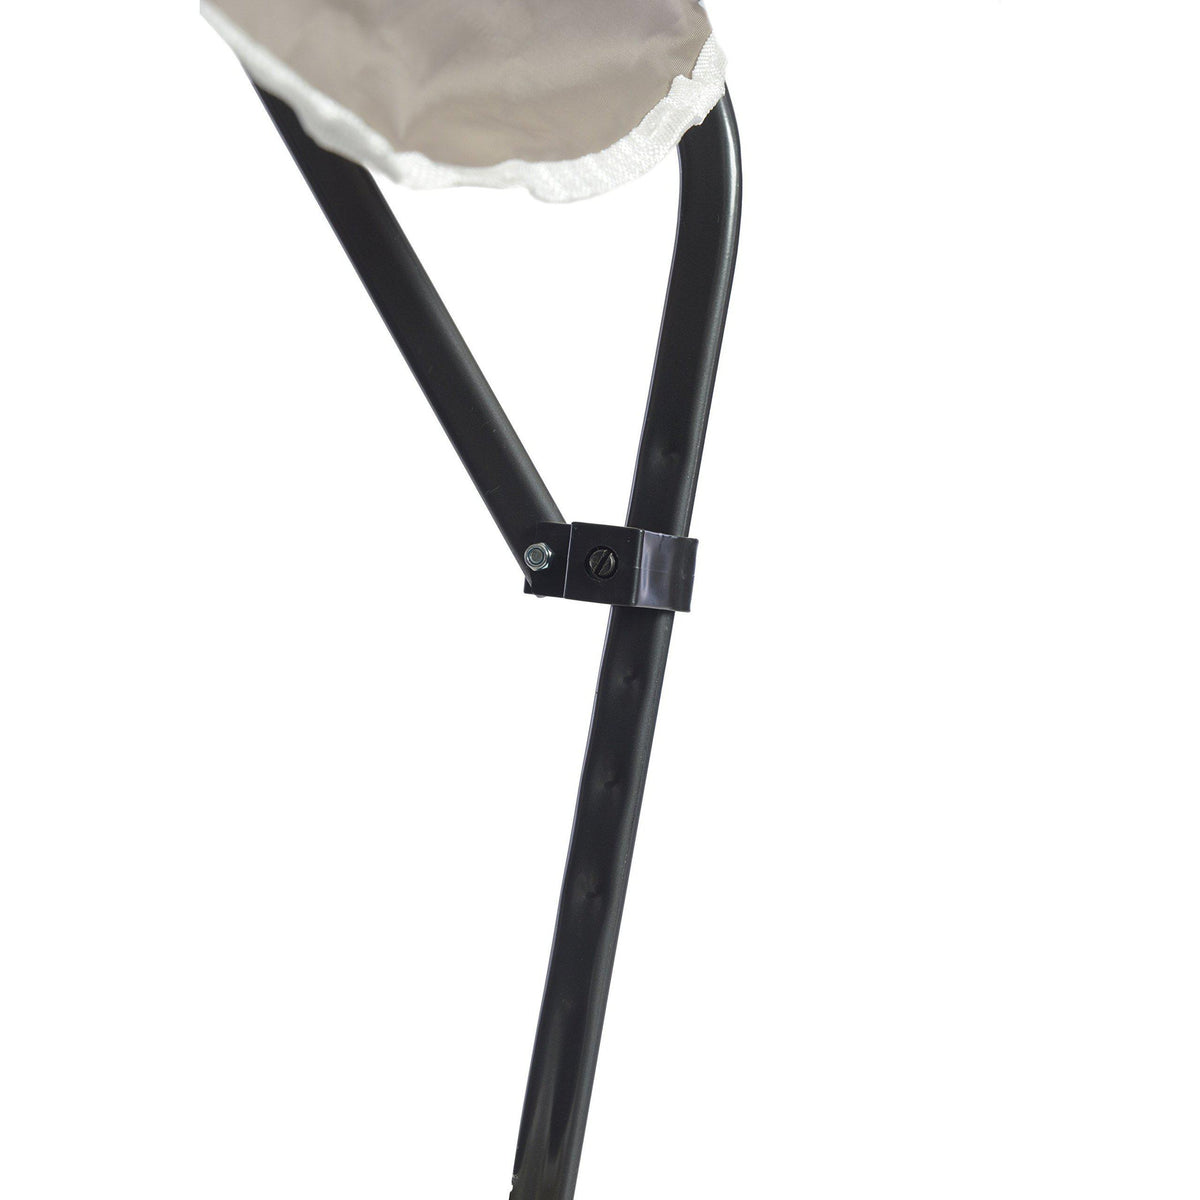 Quik Shade Pro Comfort High Back Shade Folding Chair, Tan/Black